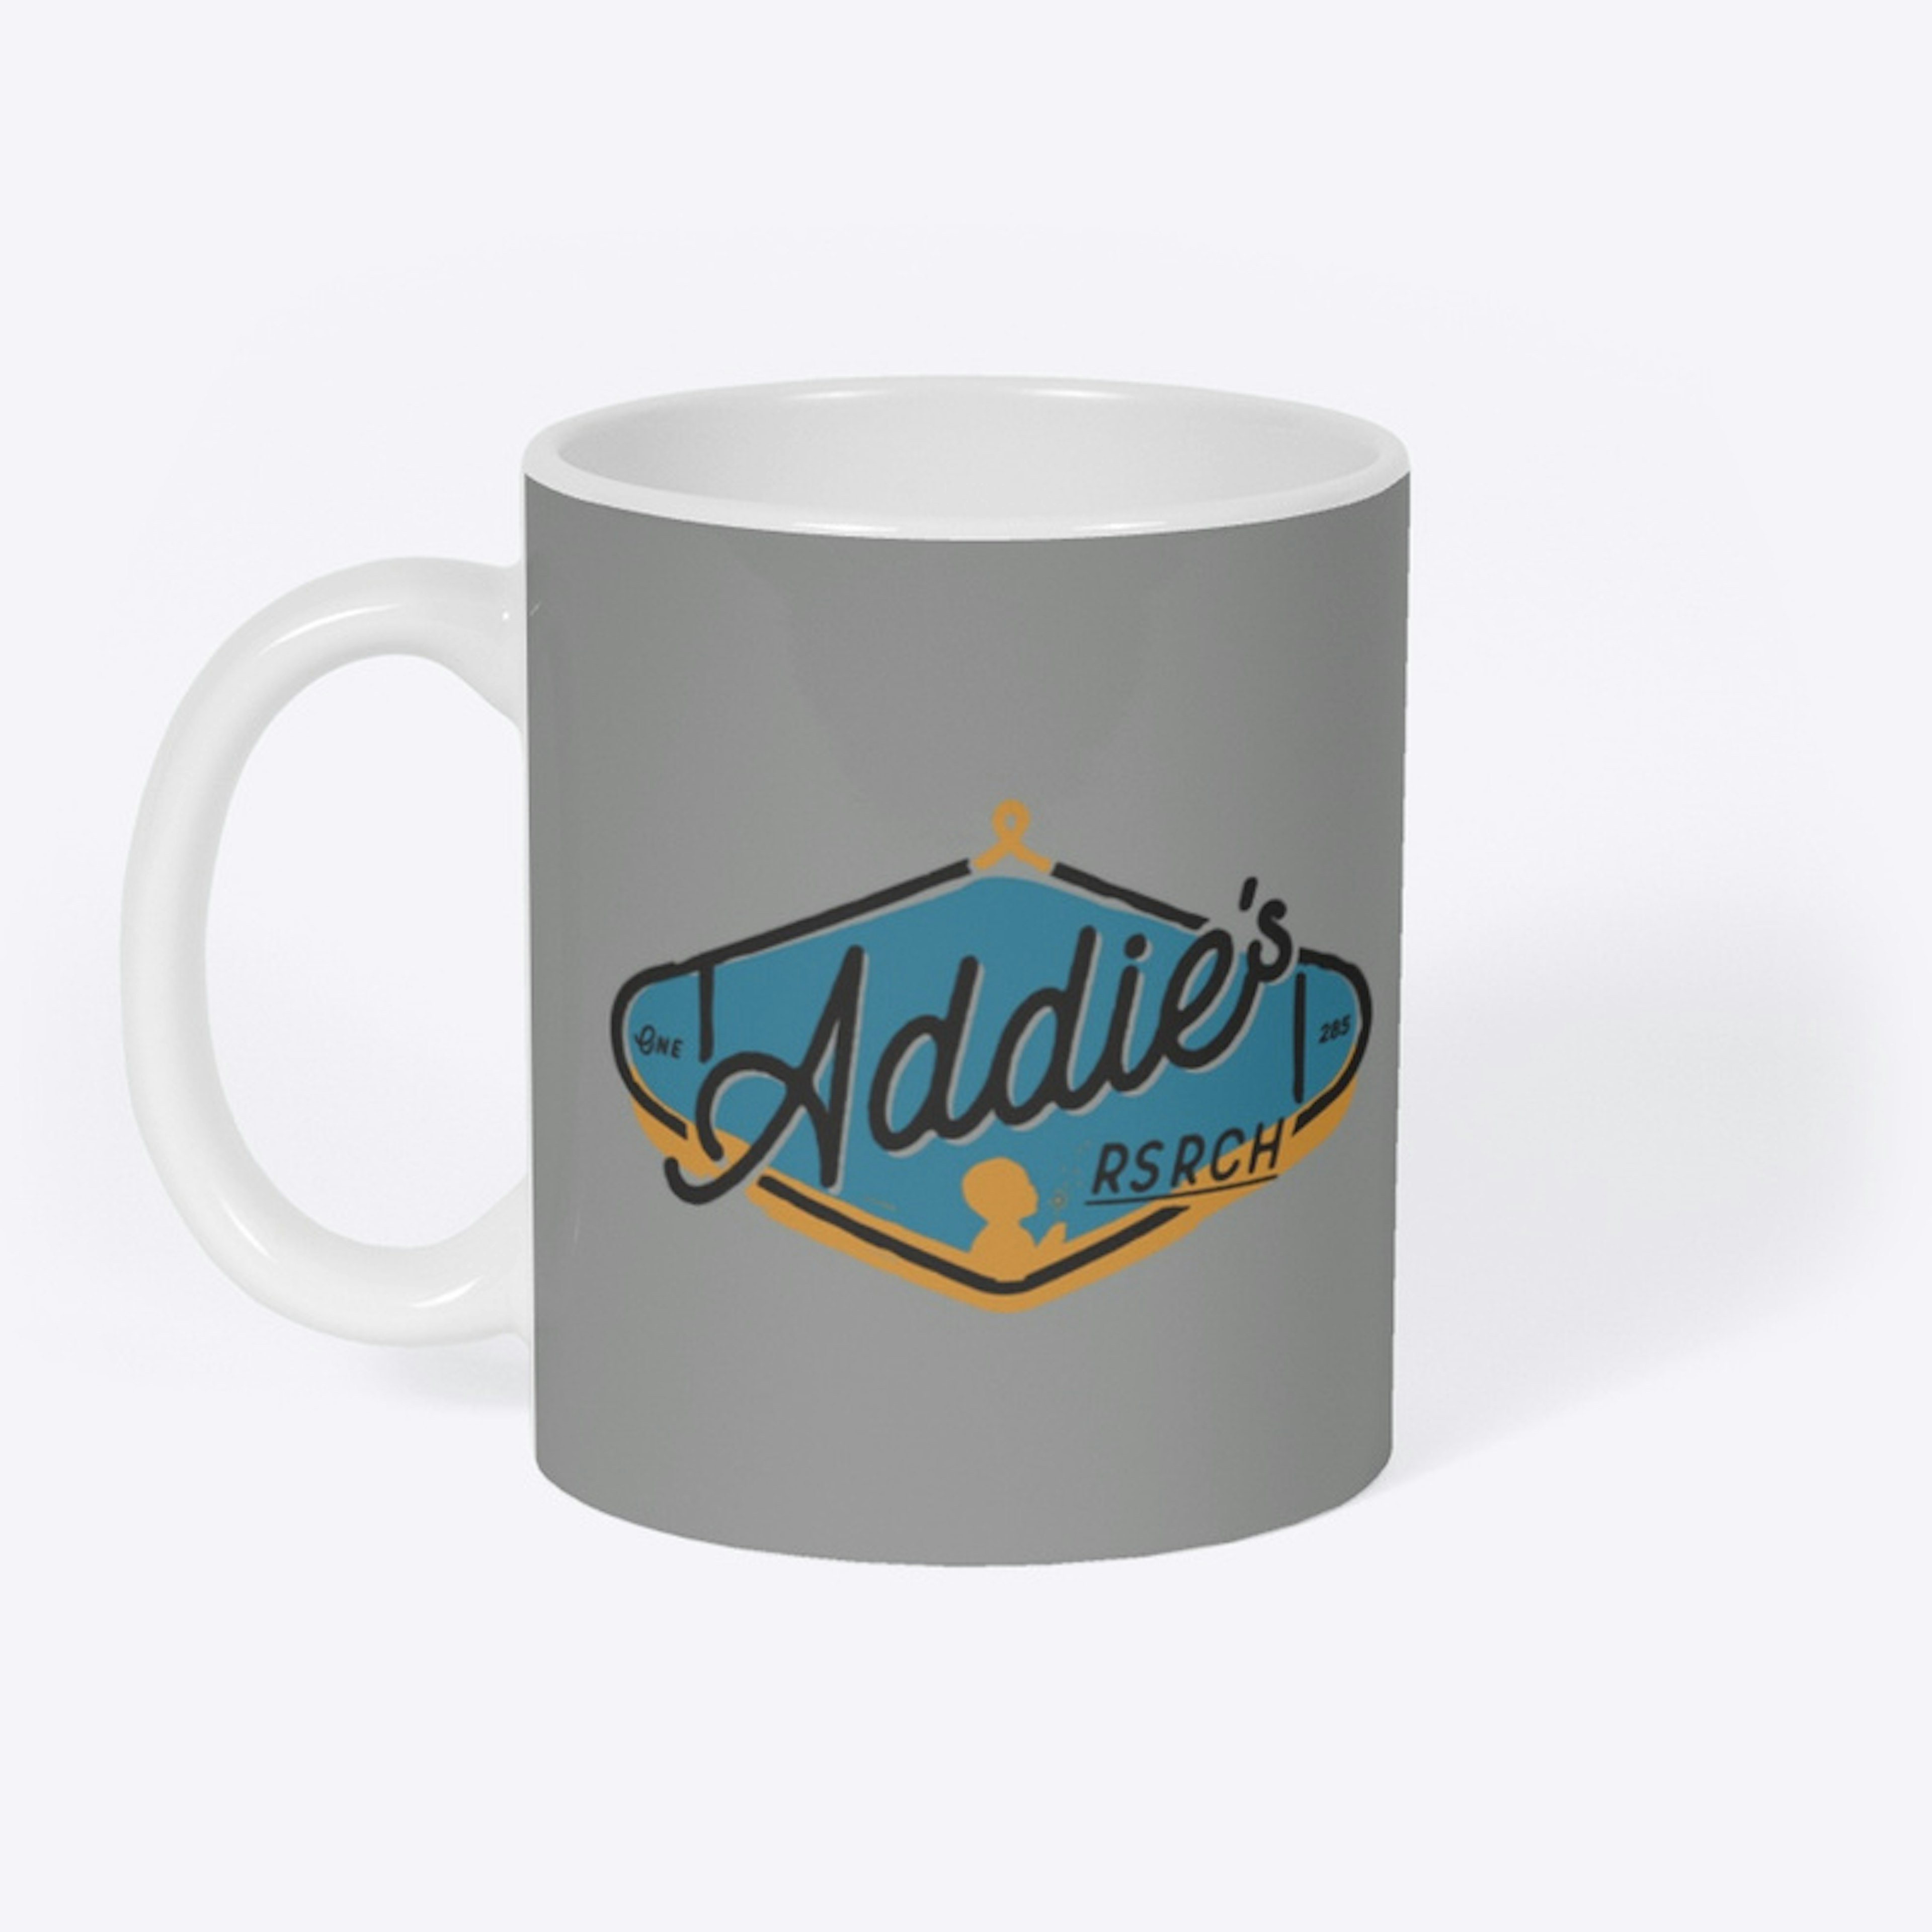 Addie's Research Mug - blue logo